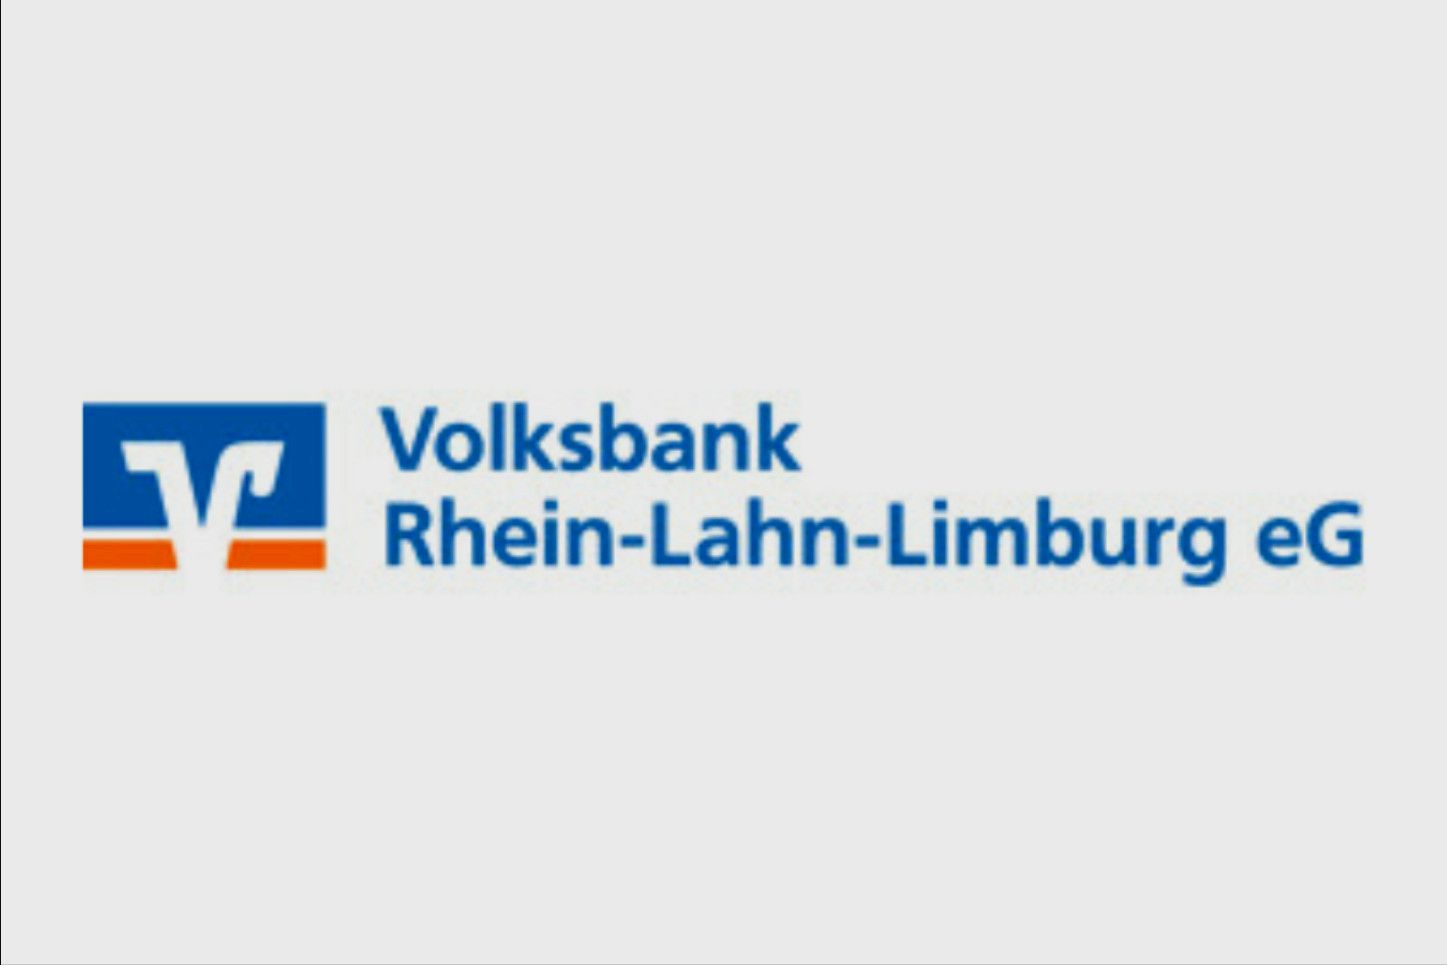 Volksbank Rhein-Lahn-Limburg eG